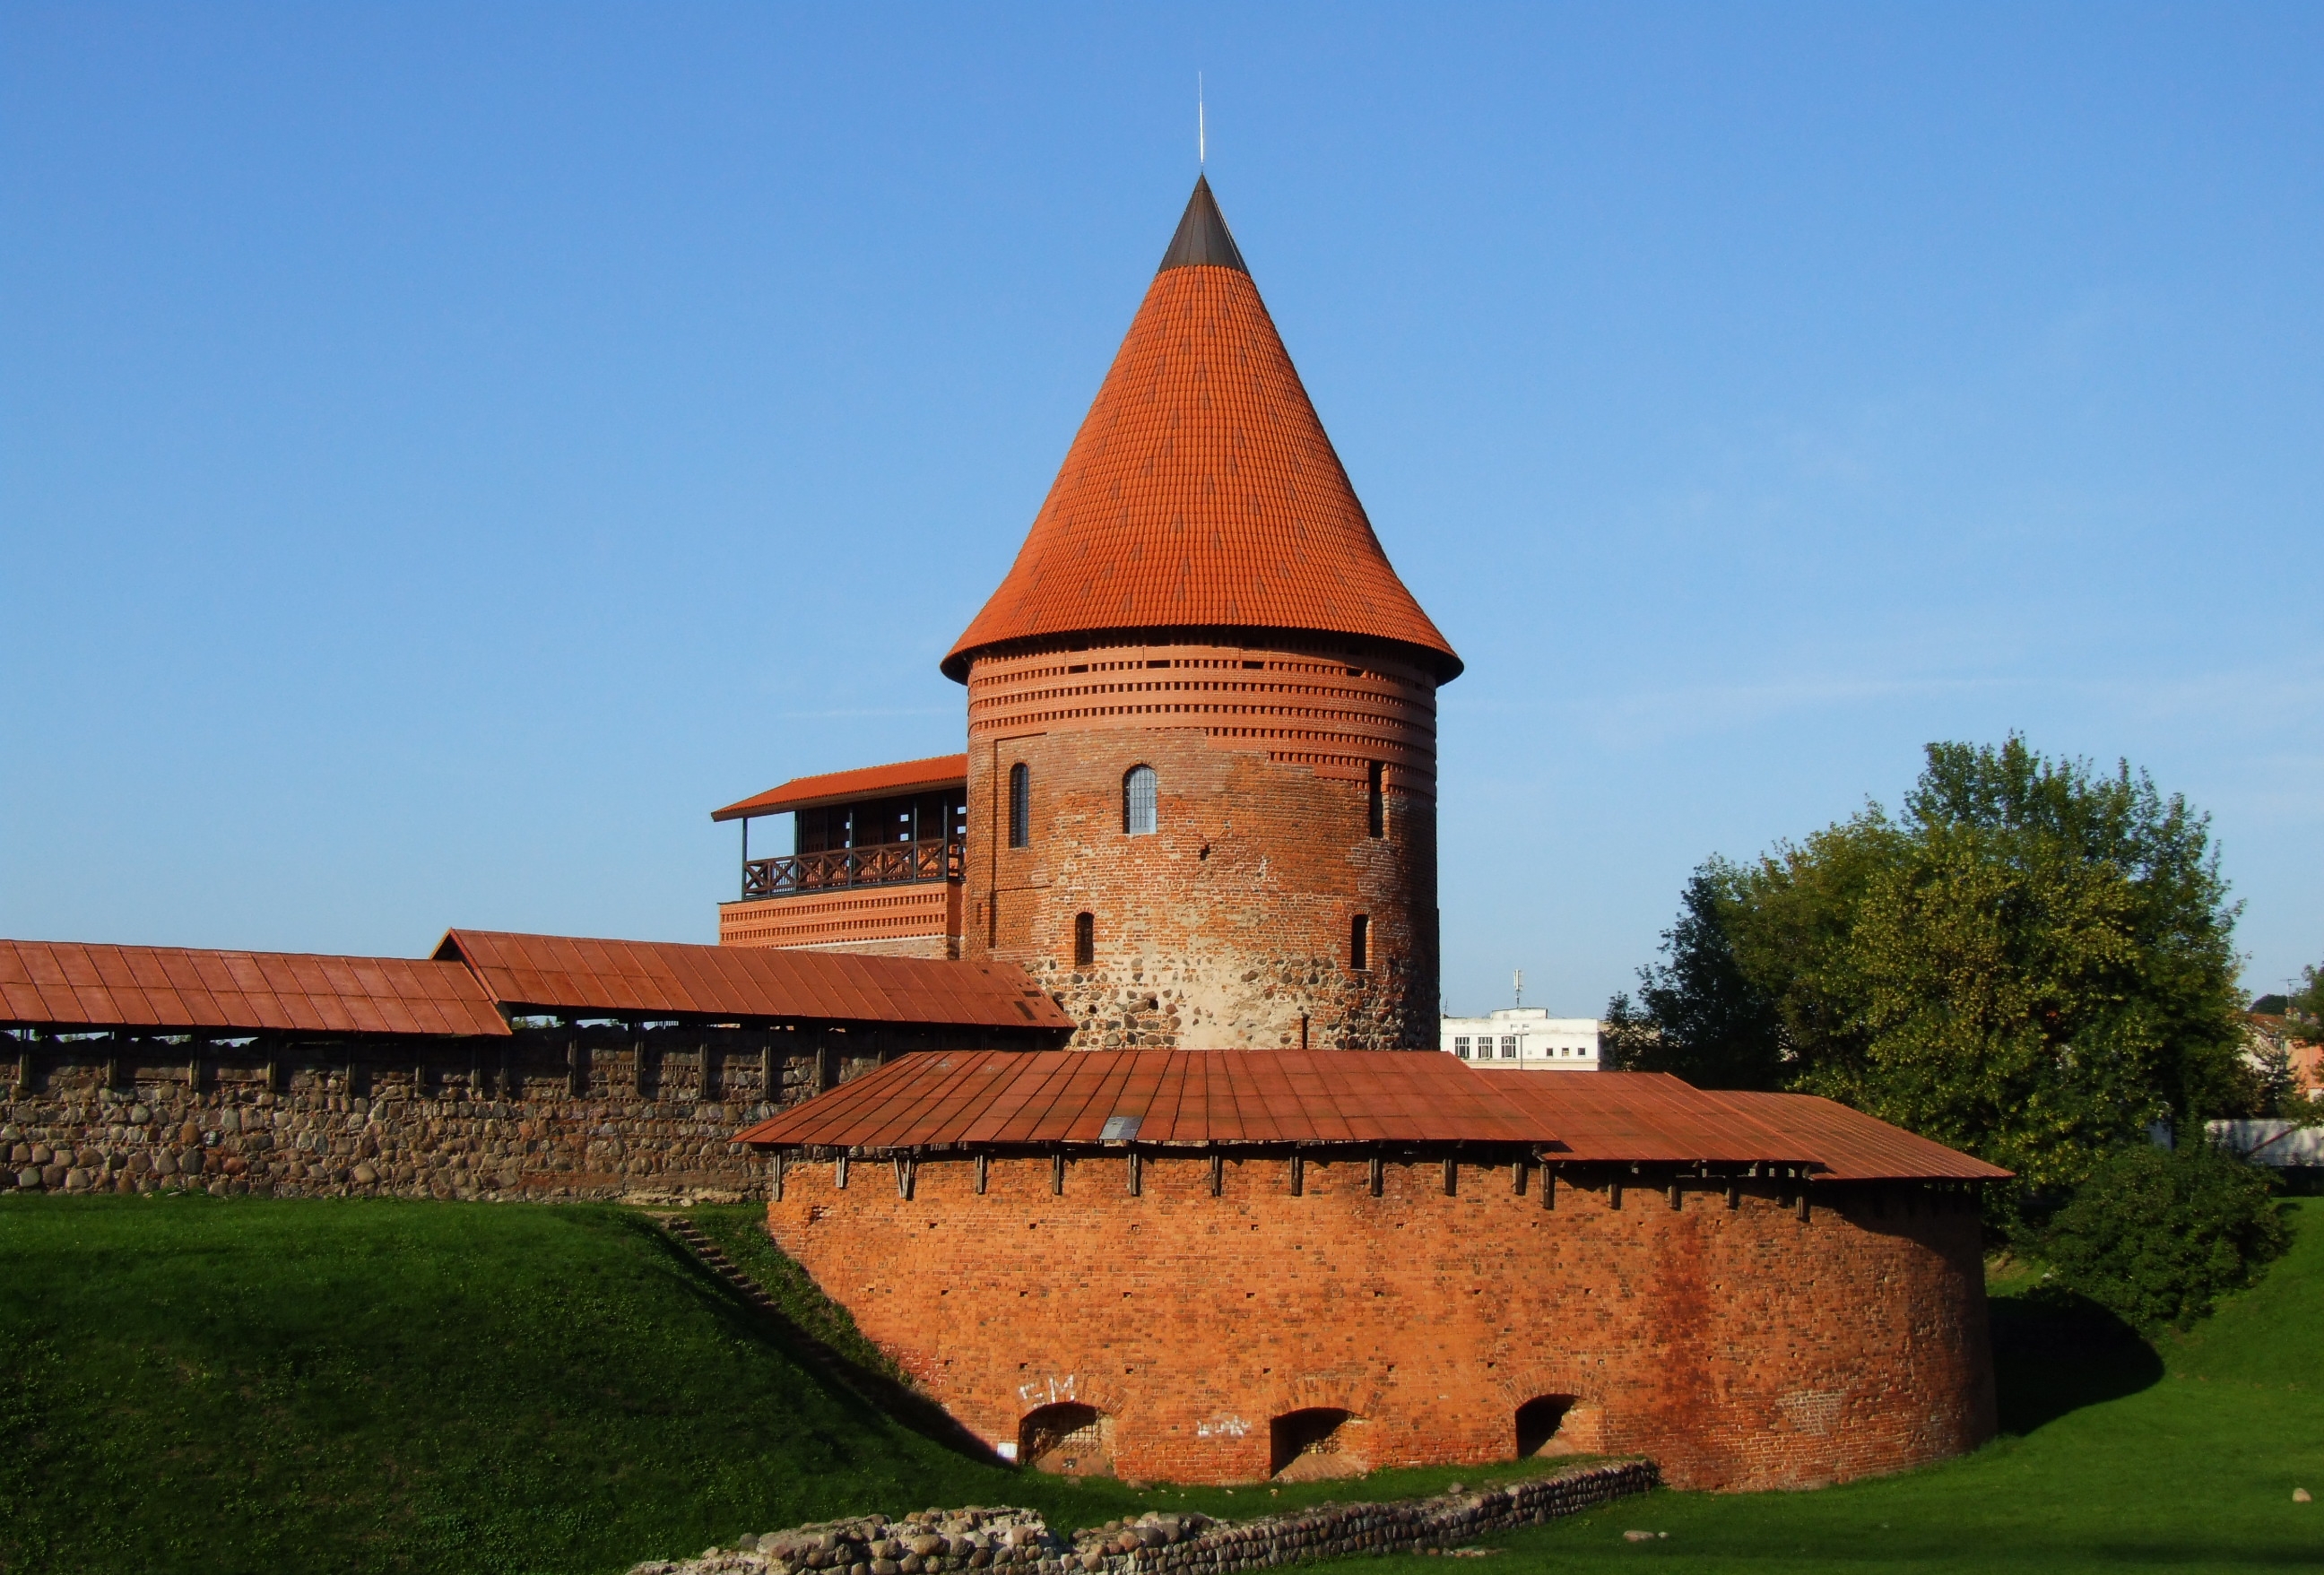  The Kauna Castle